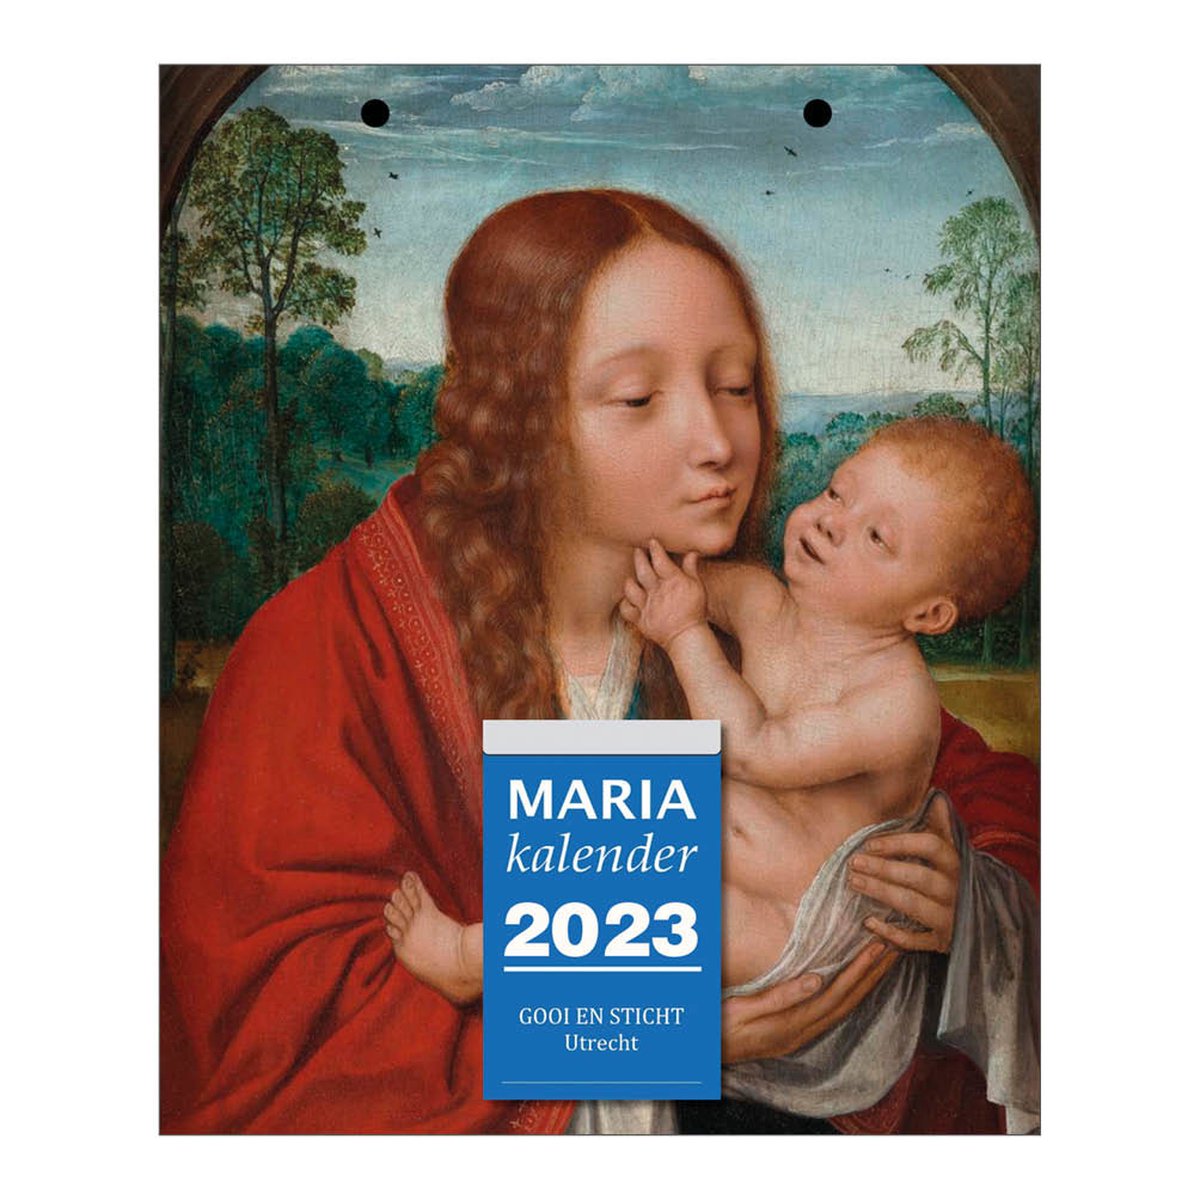 Mariakalender 2023